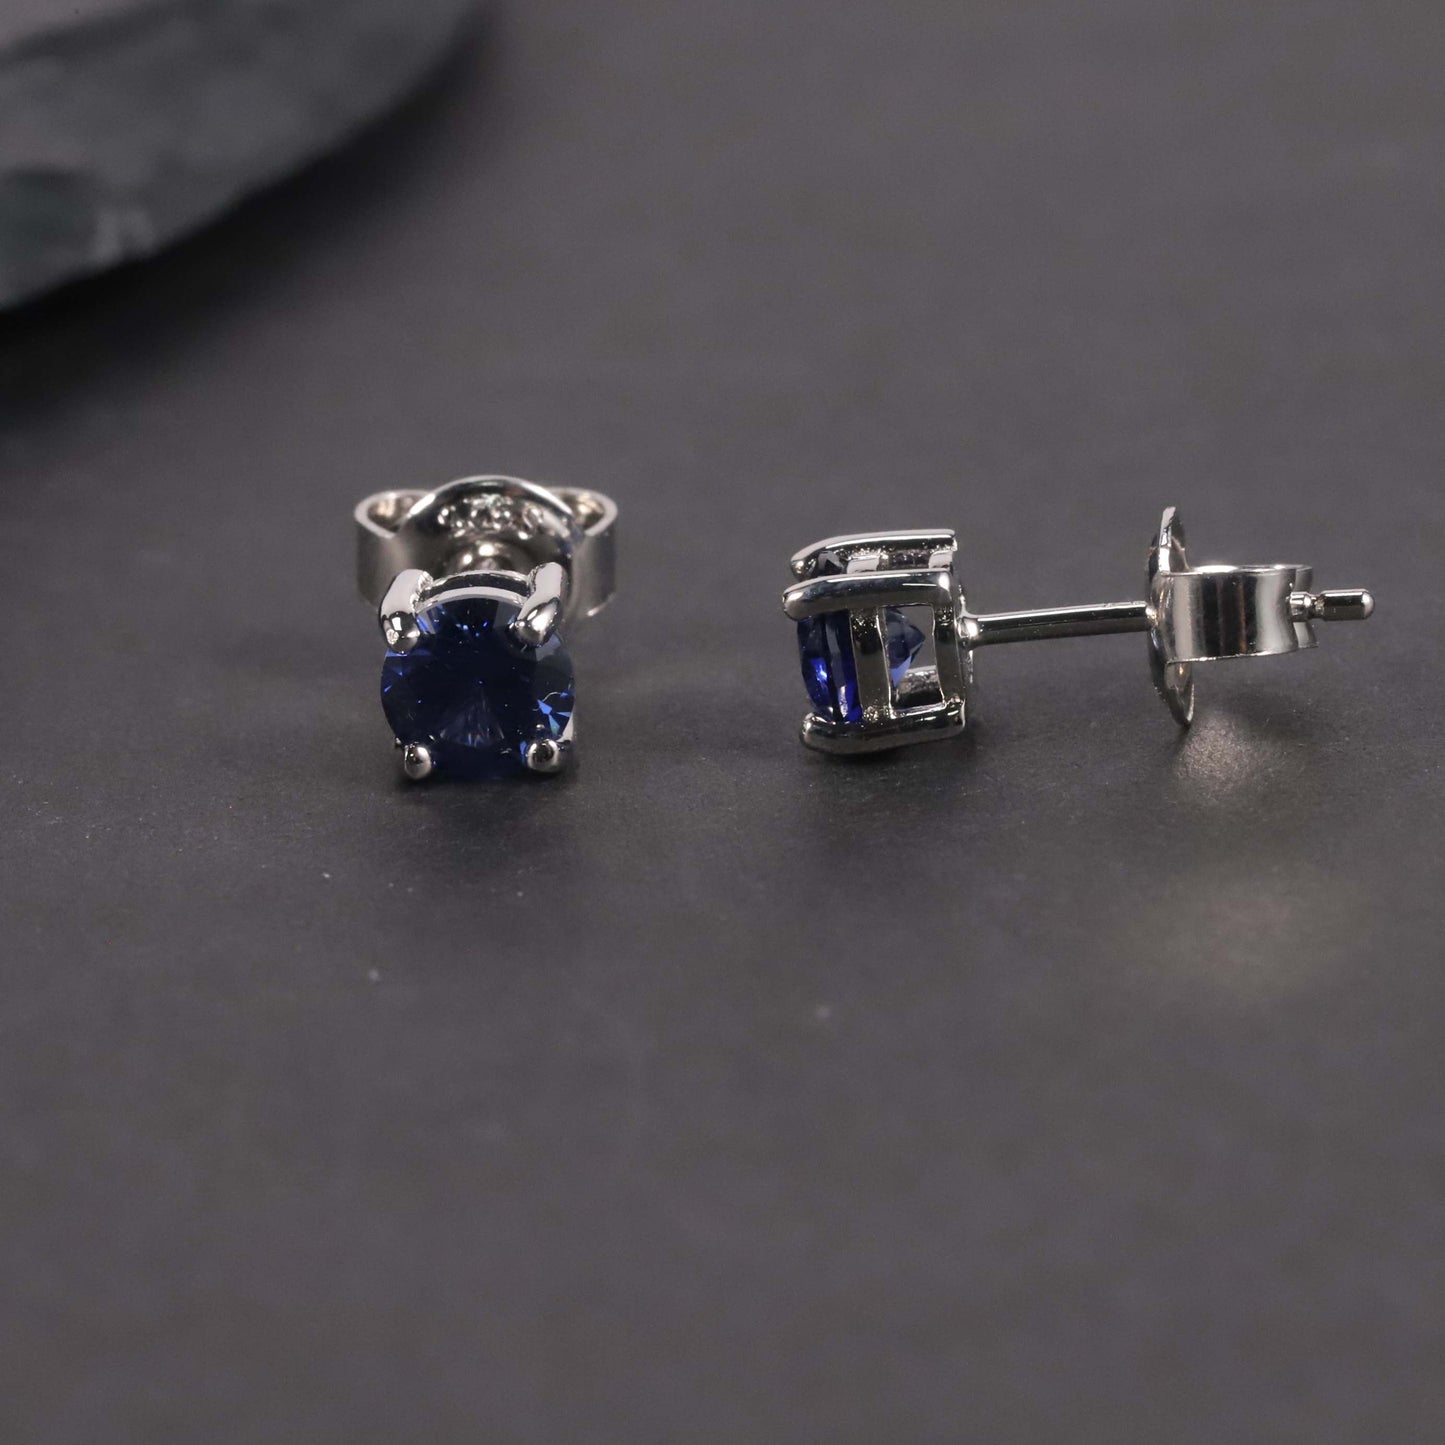 Round Cut Stud Earrings in Sterling Silver -  Sapphire